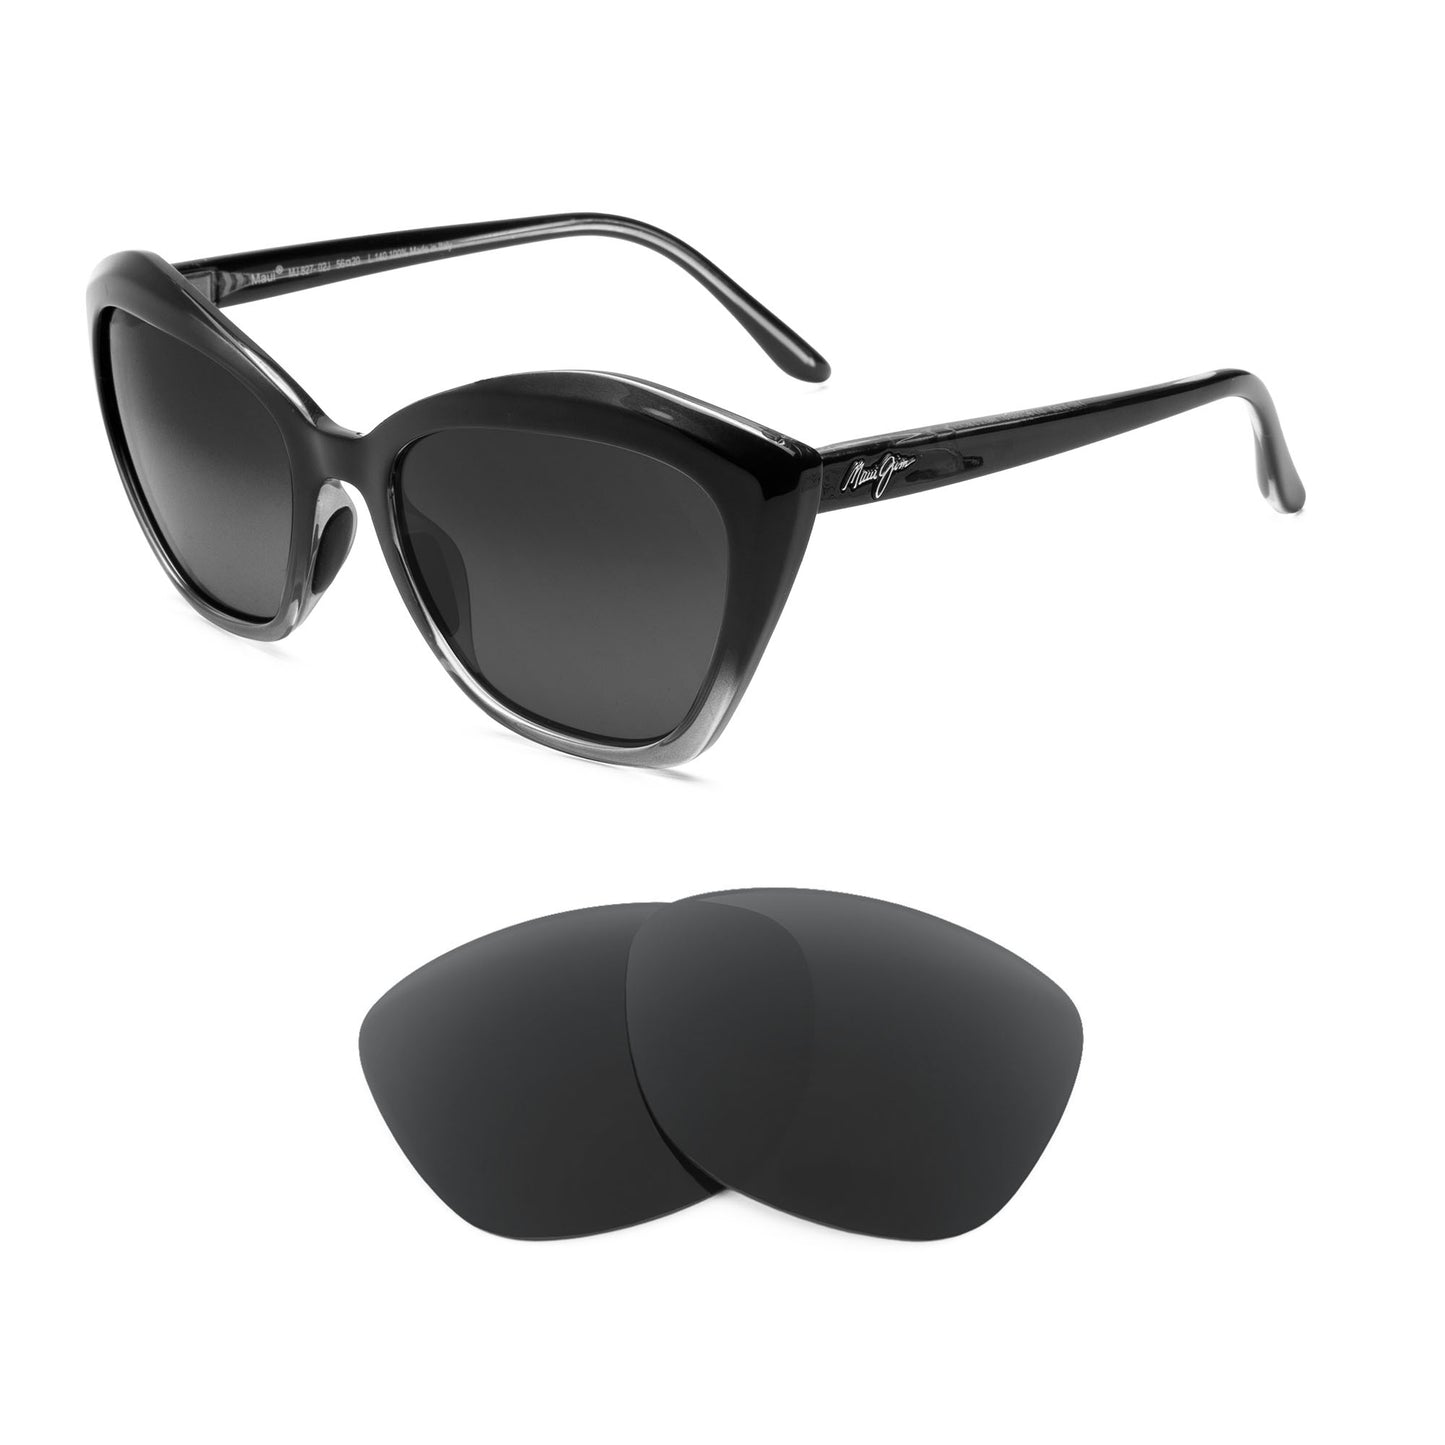 Maui Jim Lotus MJ827 sunglasses with replacement lenses